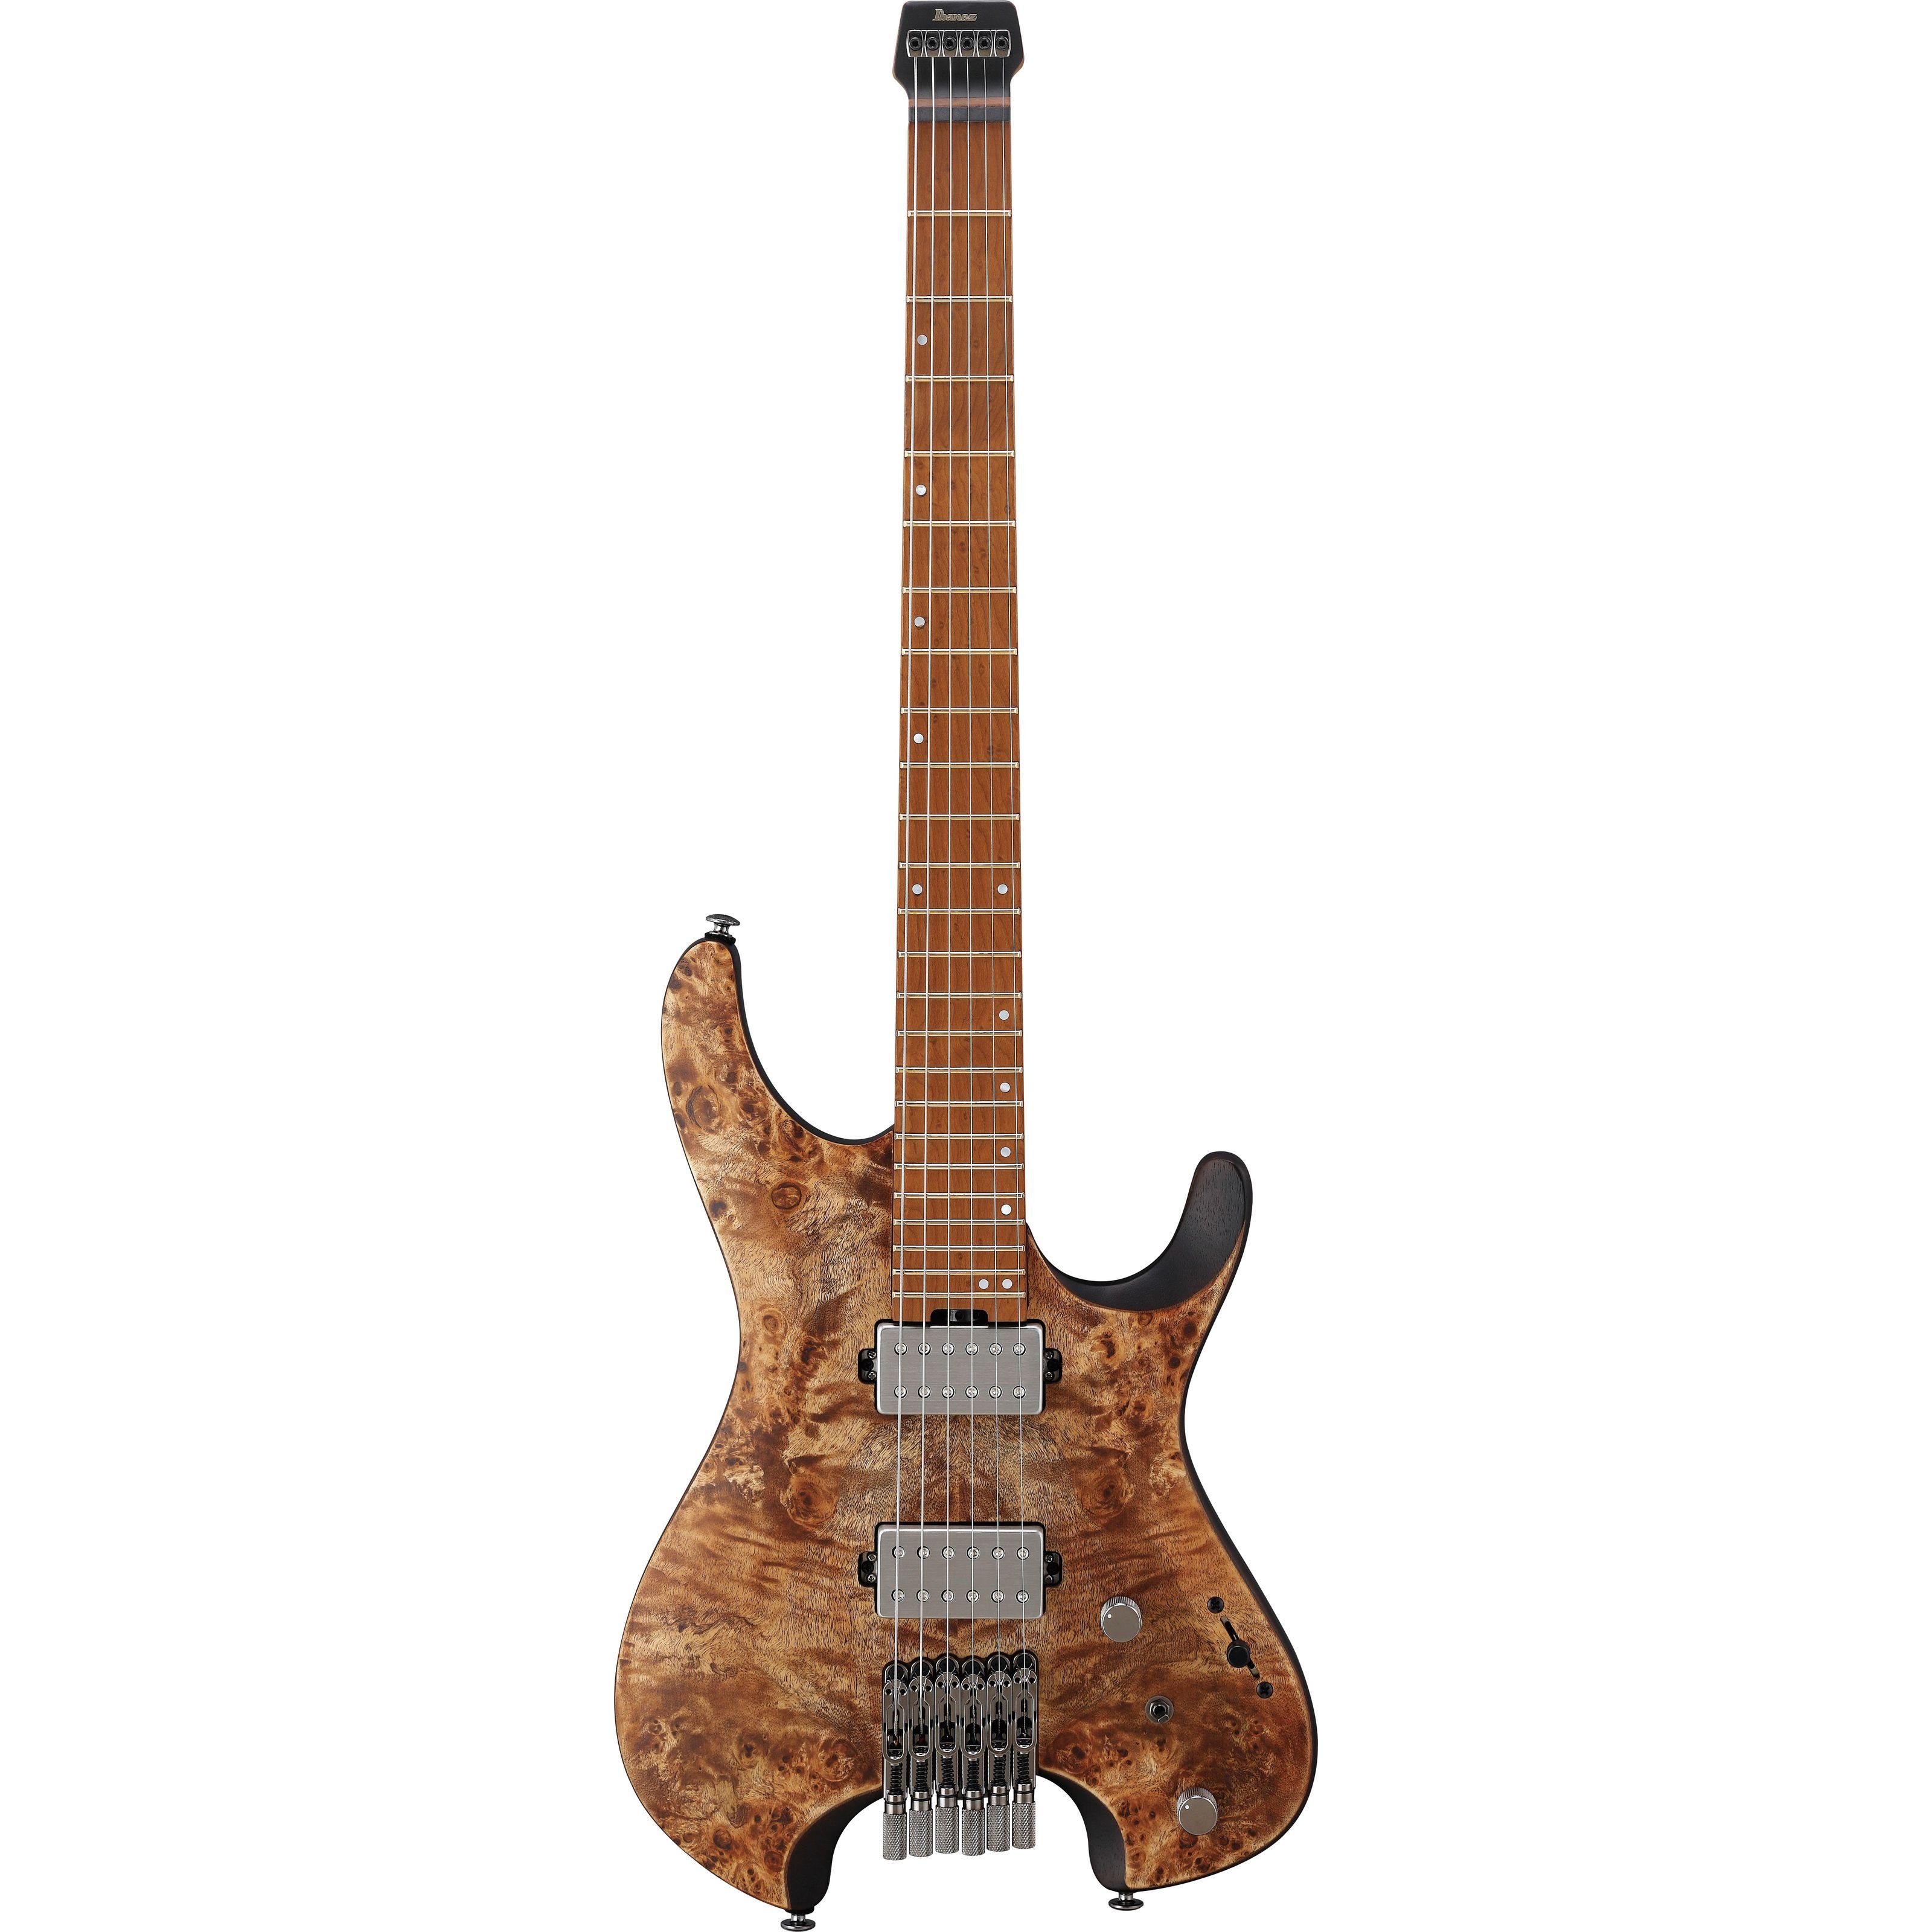 Ibanez E-Gitarre, E-Gitarren, Ibanez Modelle, Standard Q52PB-ABS Quest Antique Brown Stained - E-Gitarre